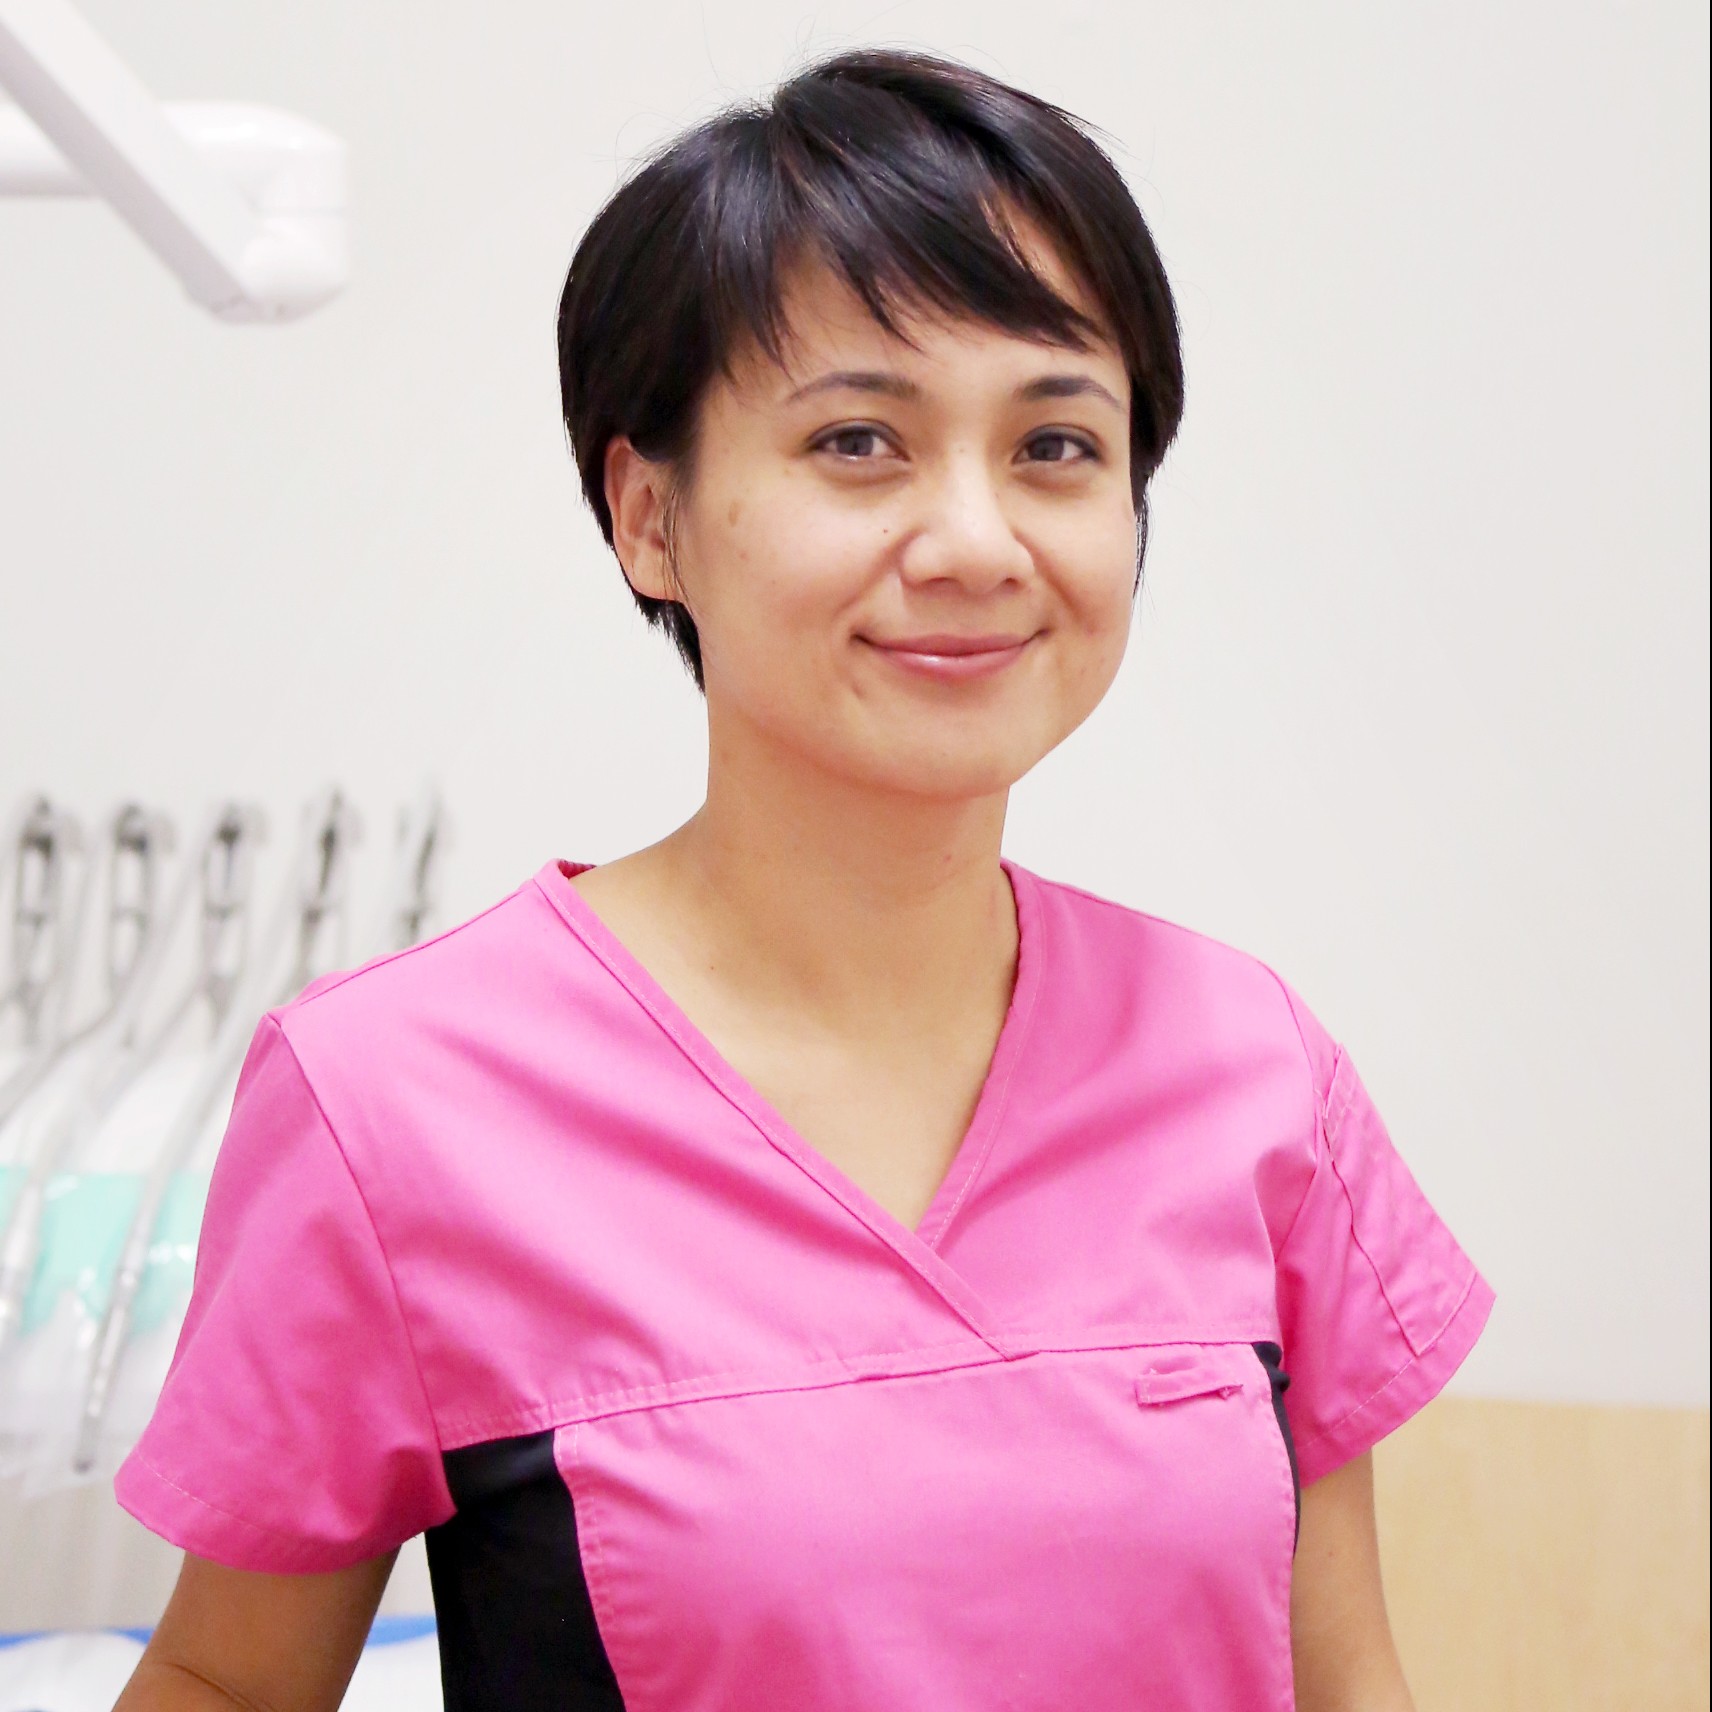 West Wyalong Dental Surgery